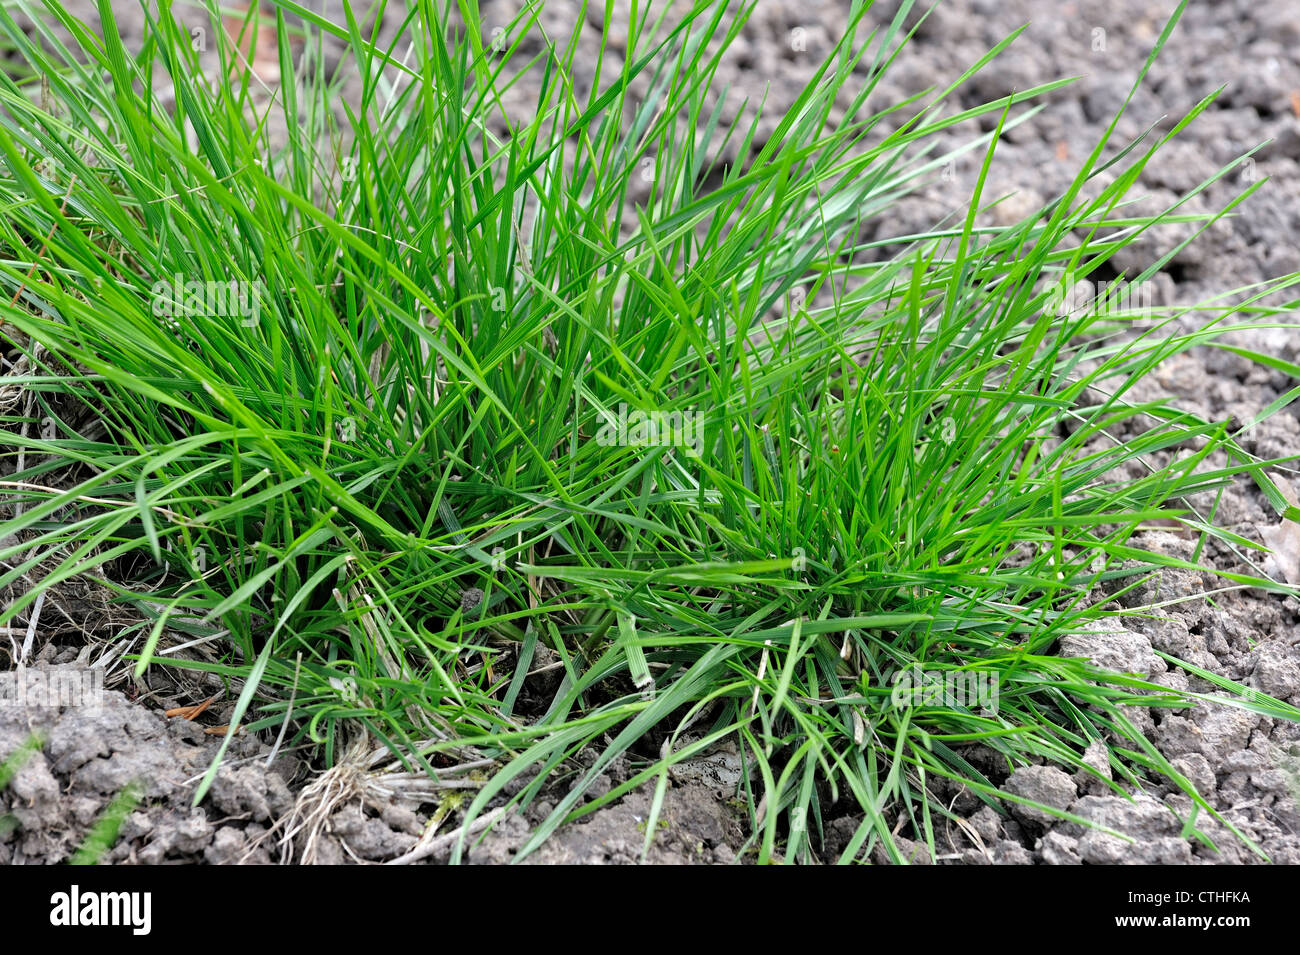 Tufted hair-grass / Tufted hair grass / Tussock grass (Deschampsia cespitosa), native to North America, USA Stock Photo